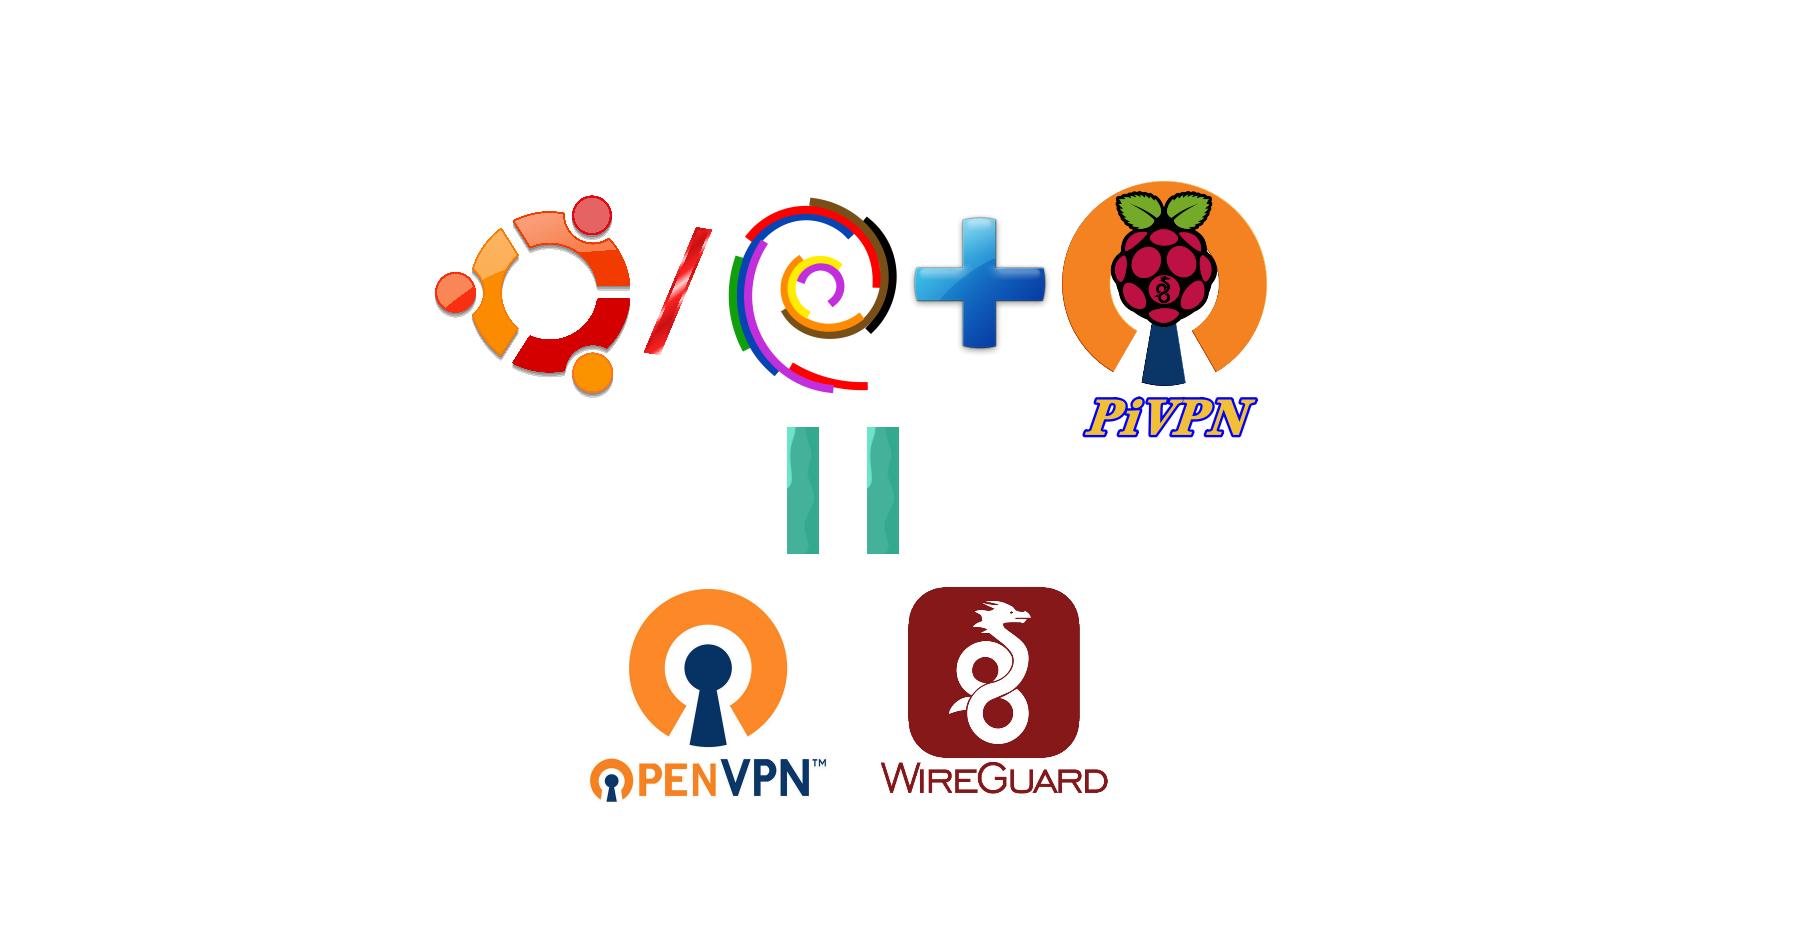 Ubuntu/Debian+PiVPN=OpenVPN/WireGuard